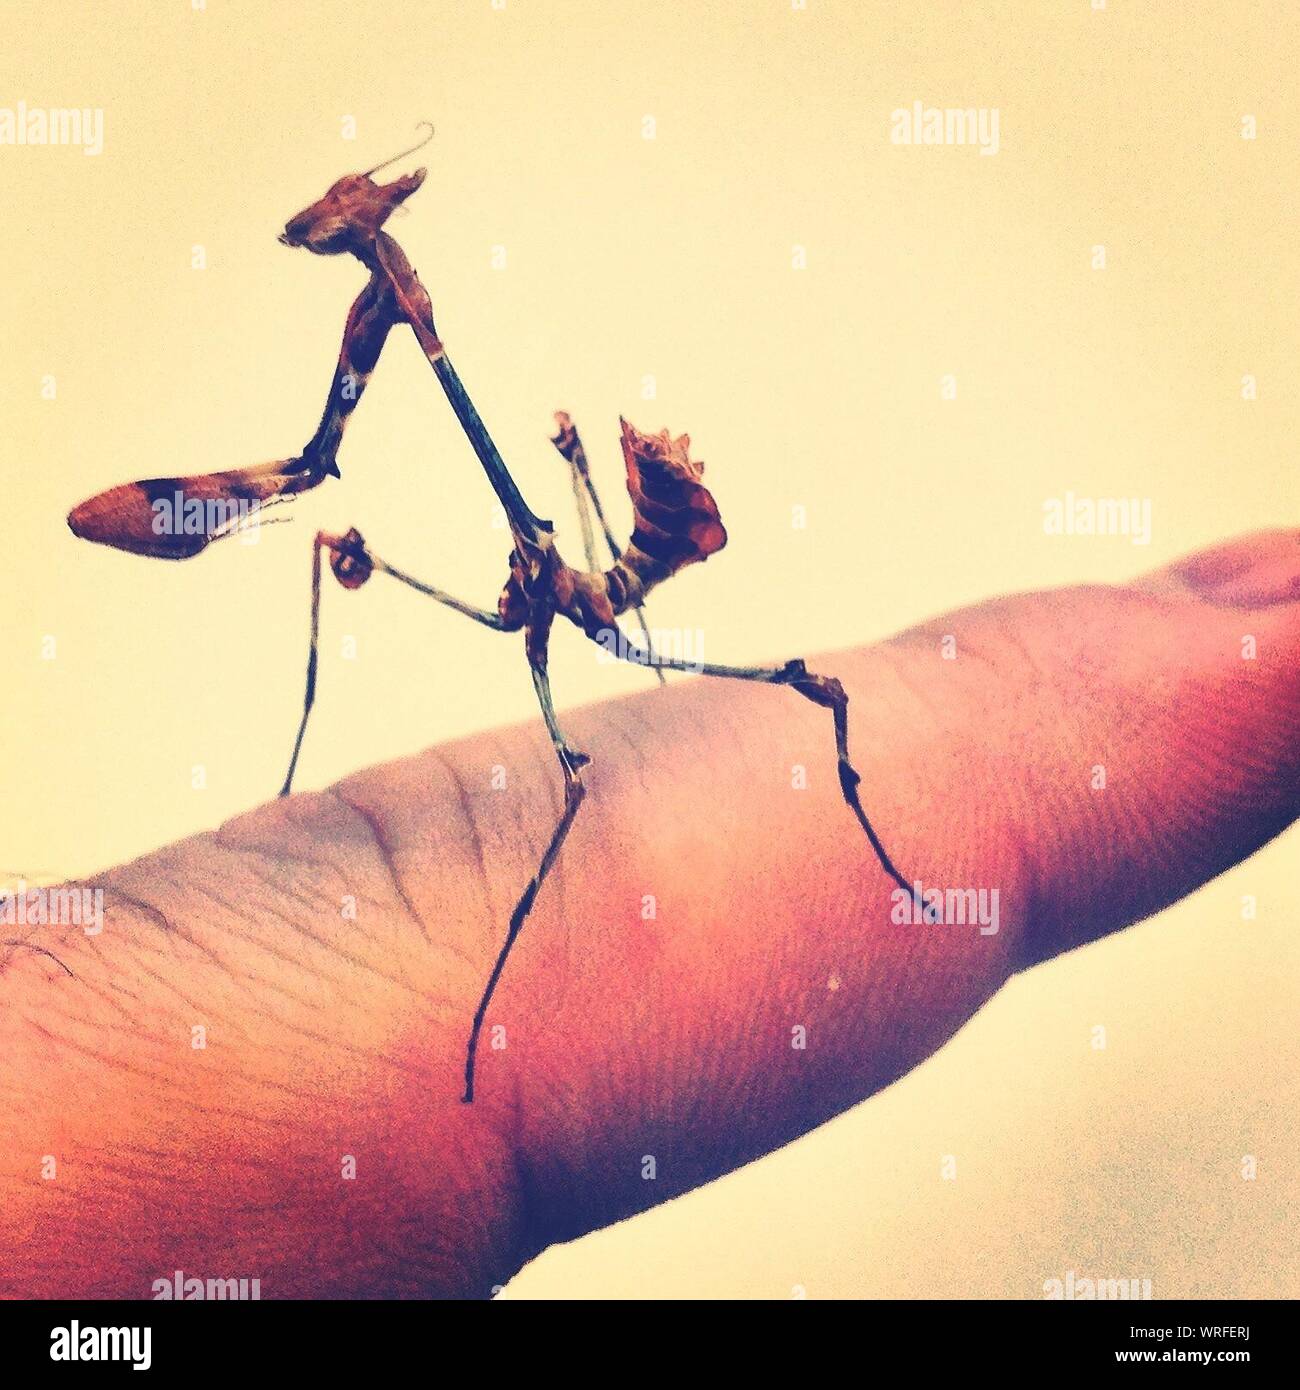 Preying Mantis On Finger Stock Photo